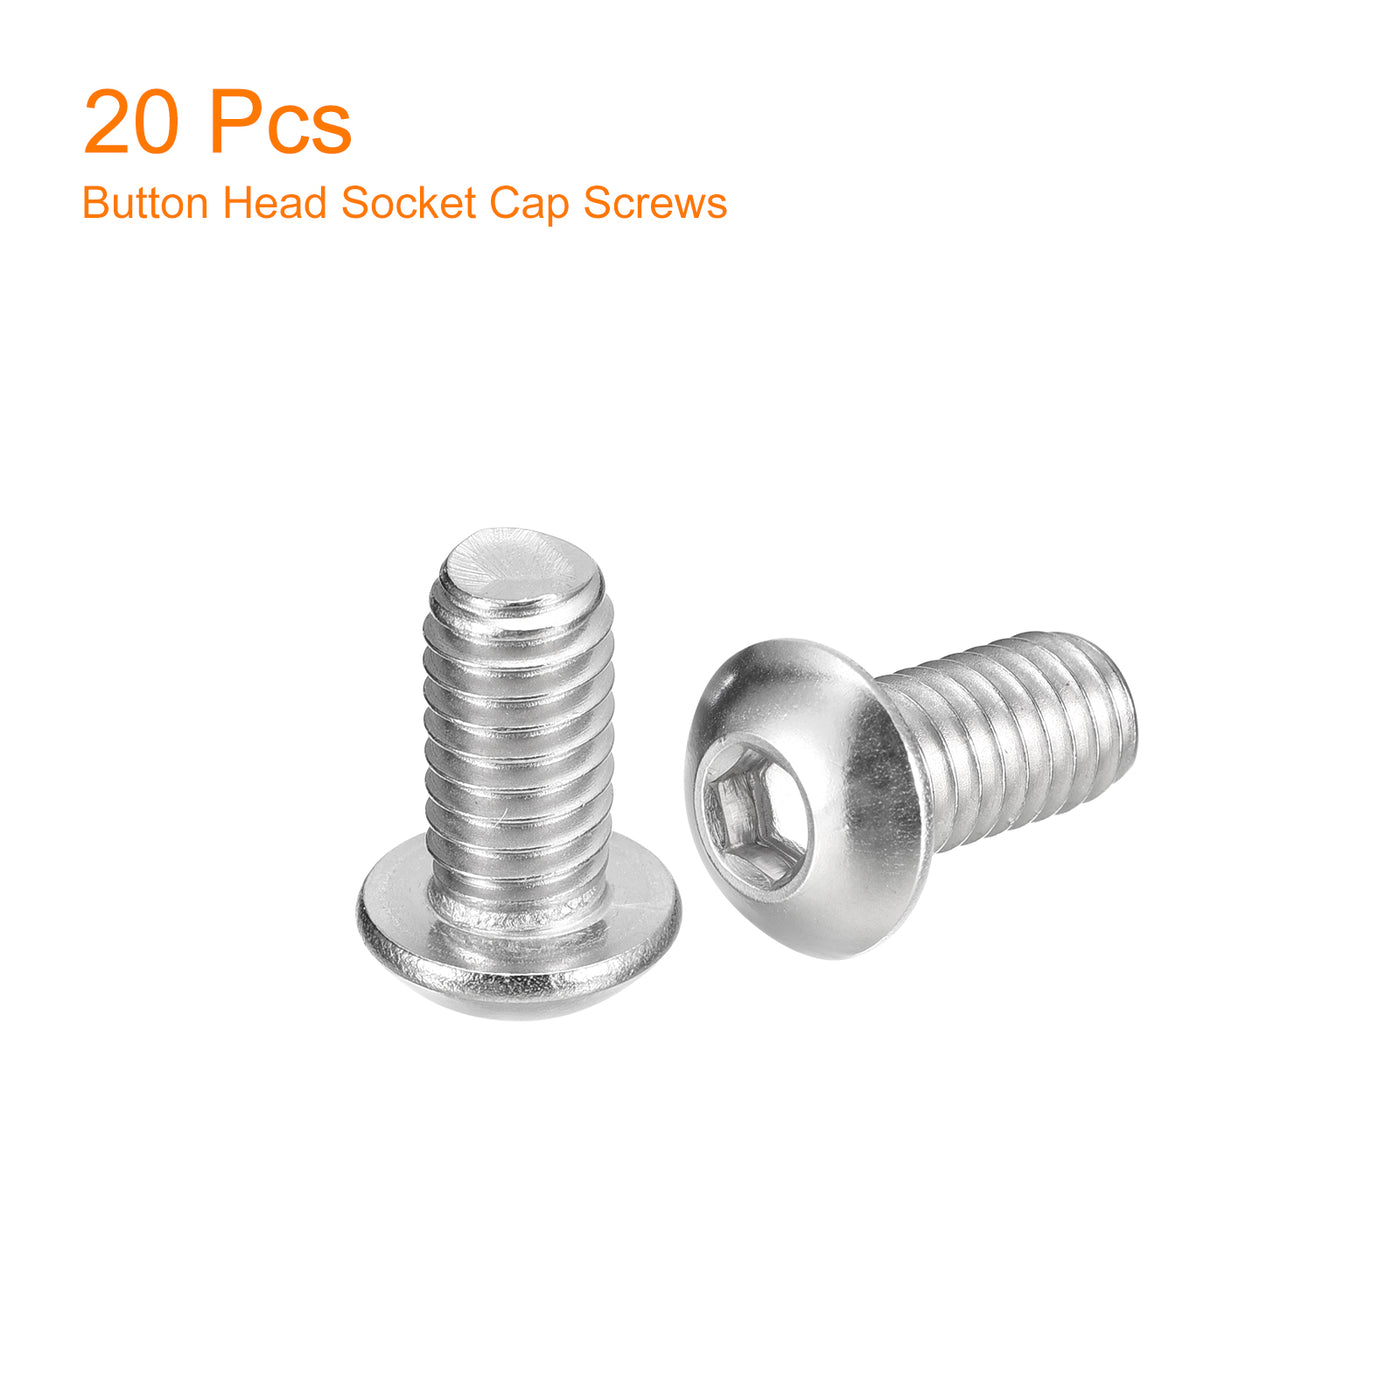 uxcell Uxcell 5/16-18x5/8" Button Head Socket Cap Screws, 20pcs 304 Stainless Steel Screws